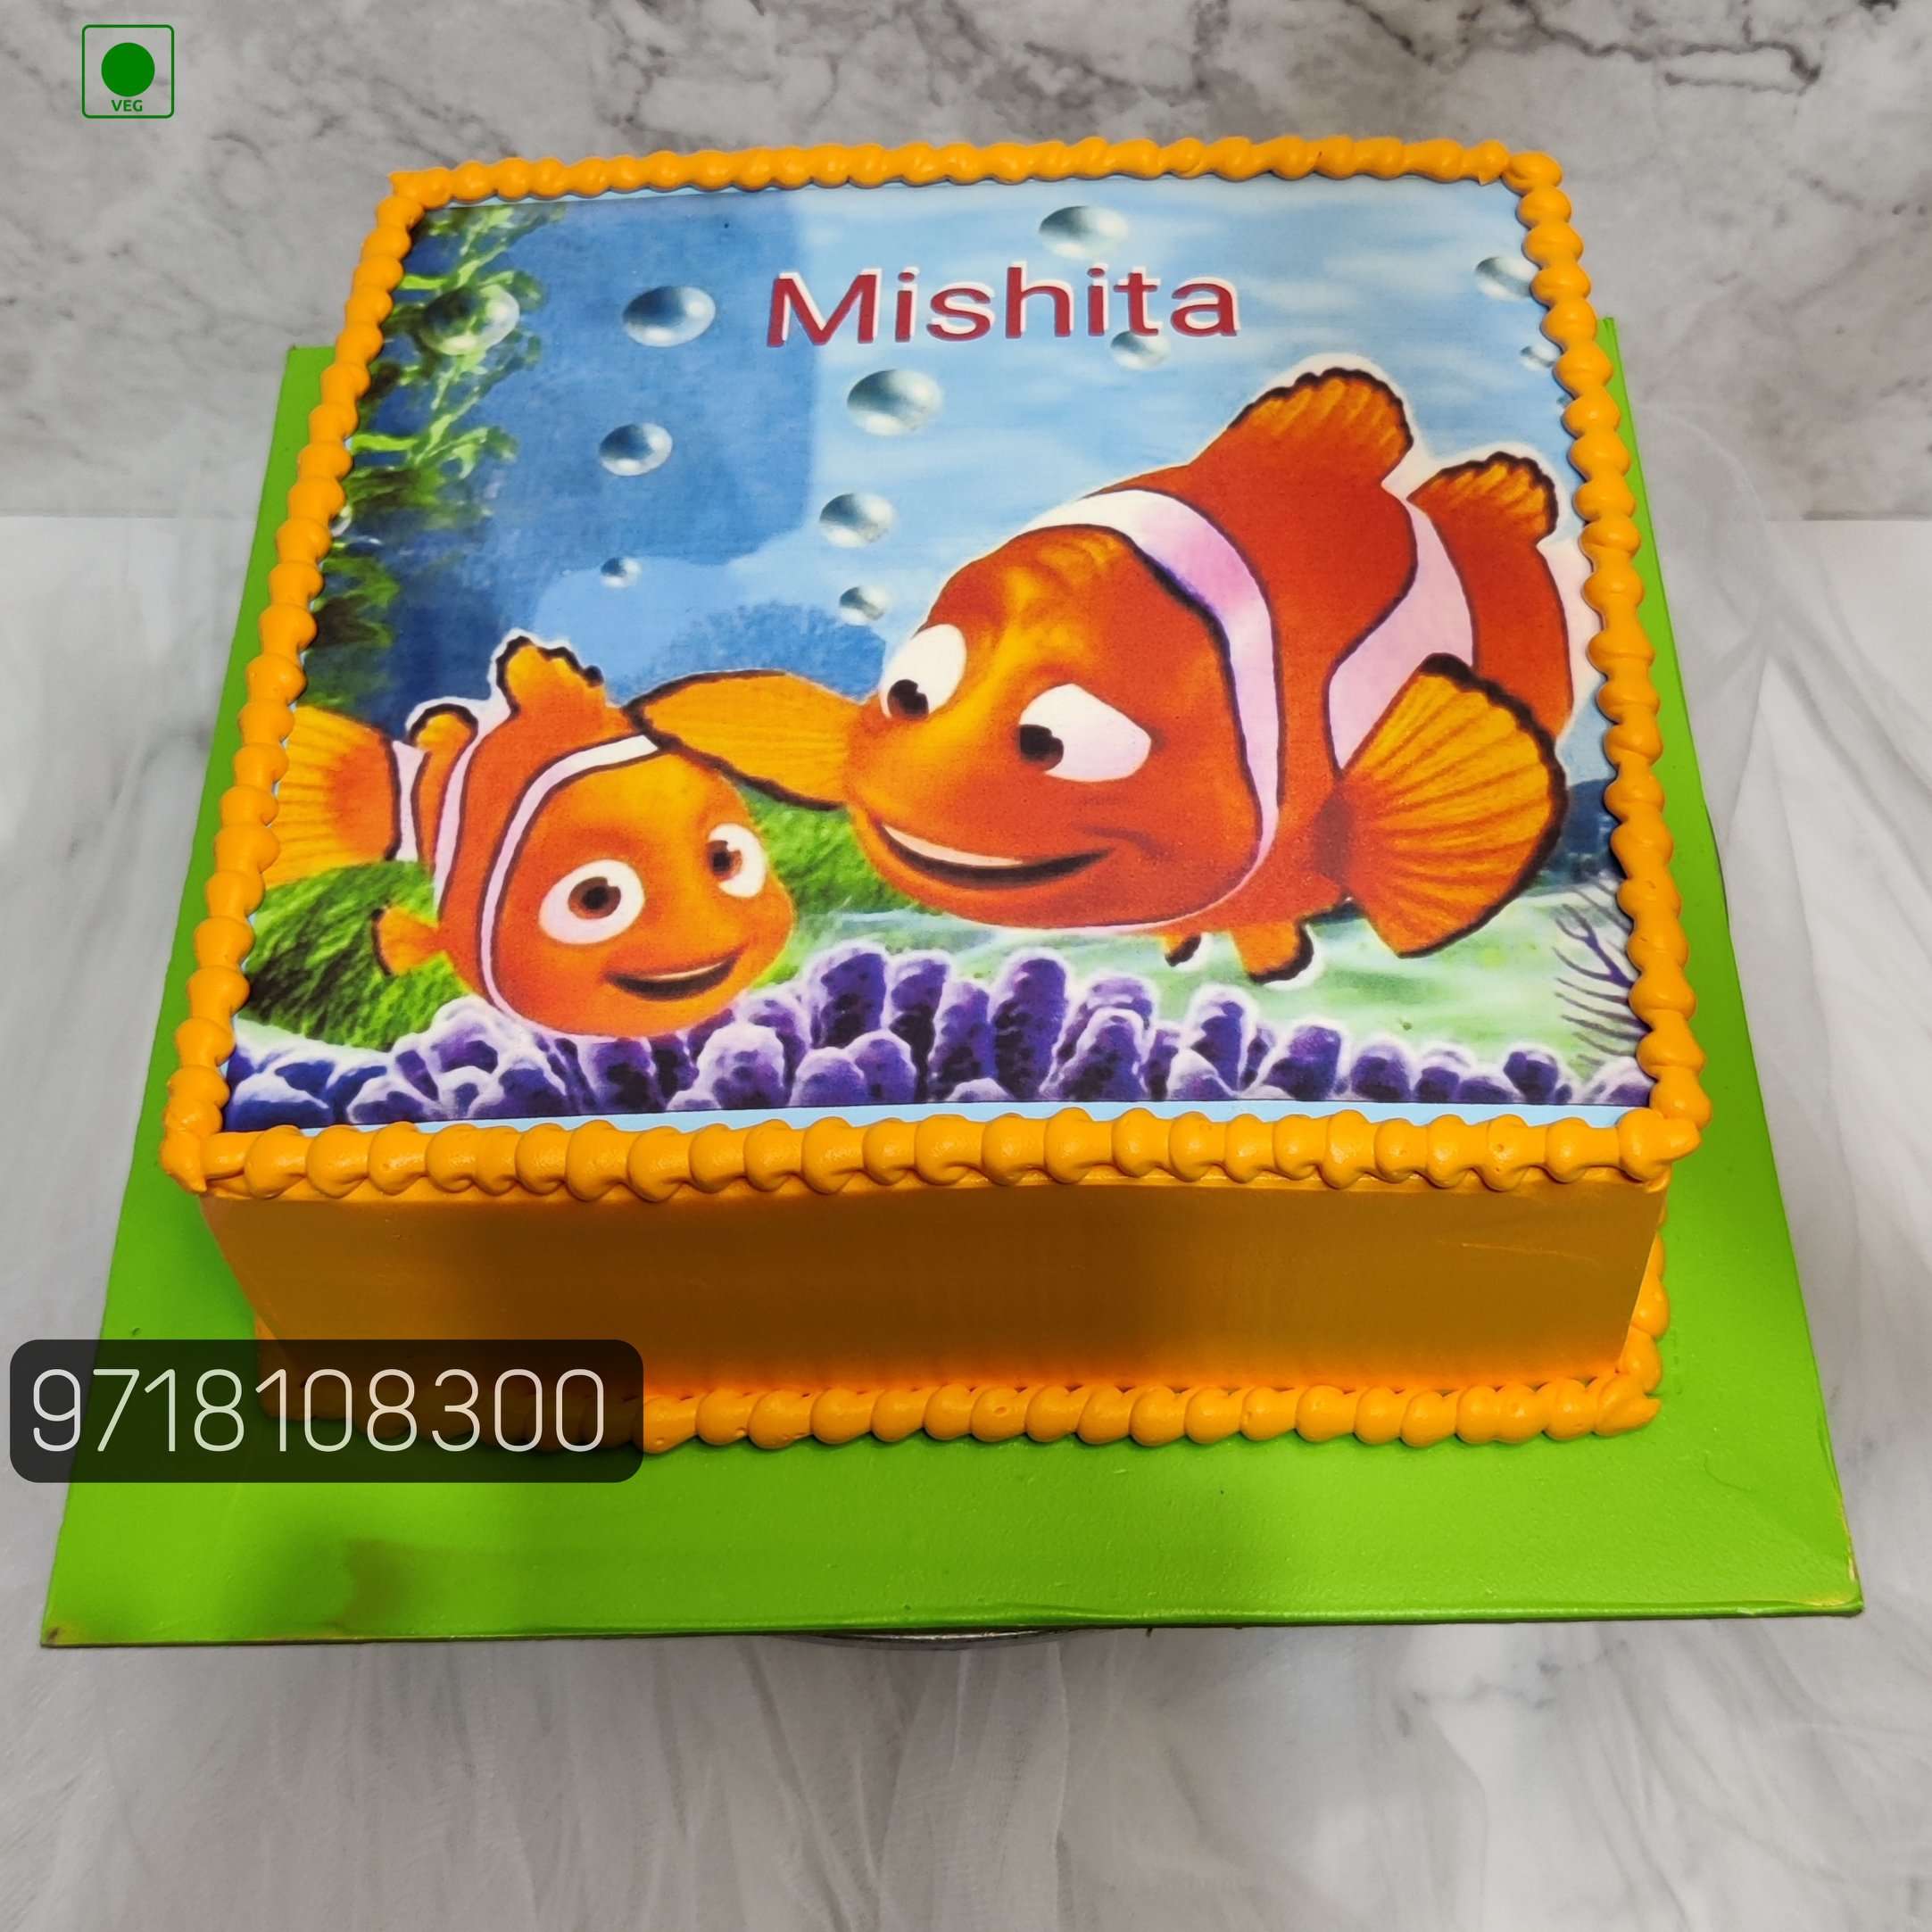 Birthday CakeFisherman with Action Fish Round16334  Aggies Bakery  Cake  Shop